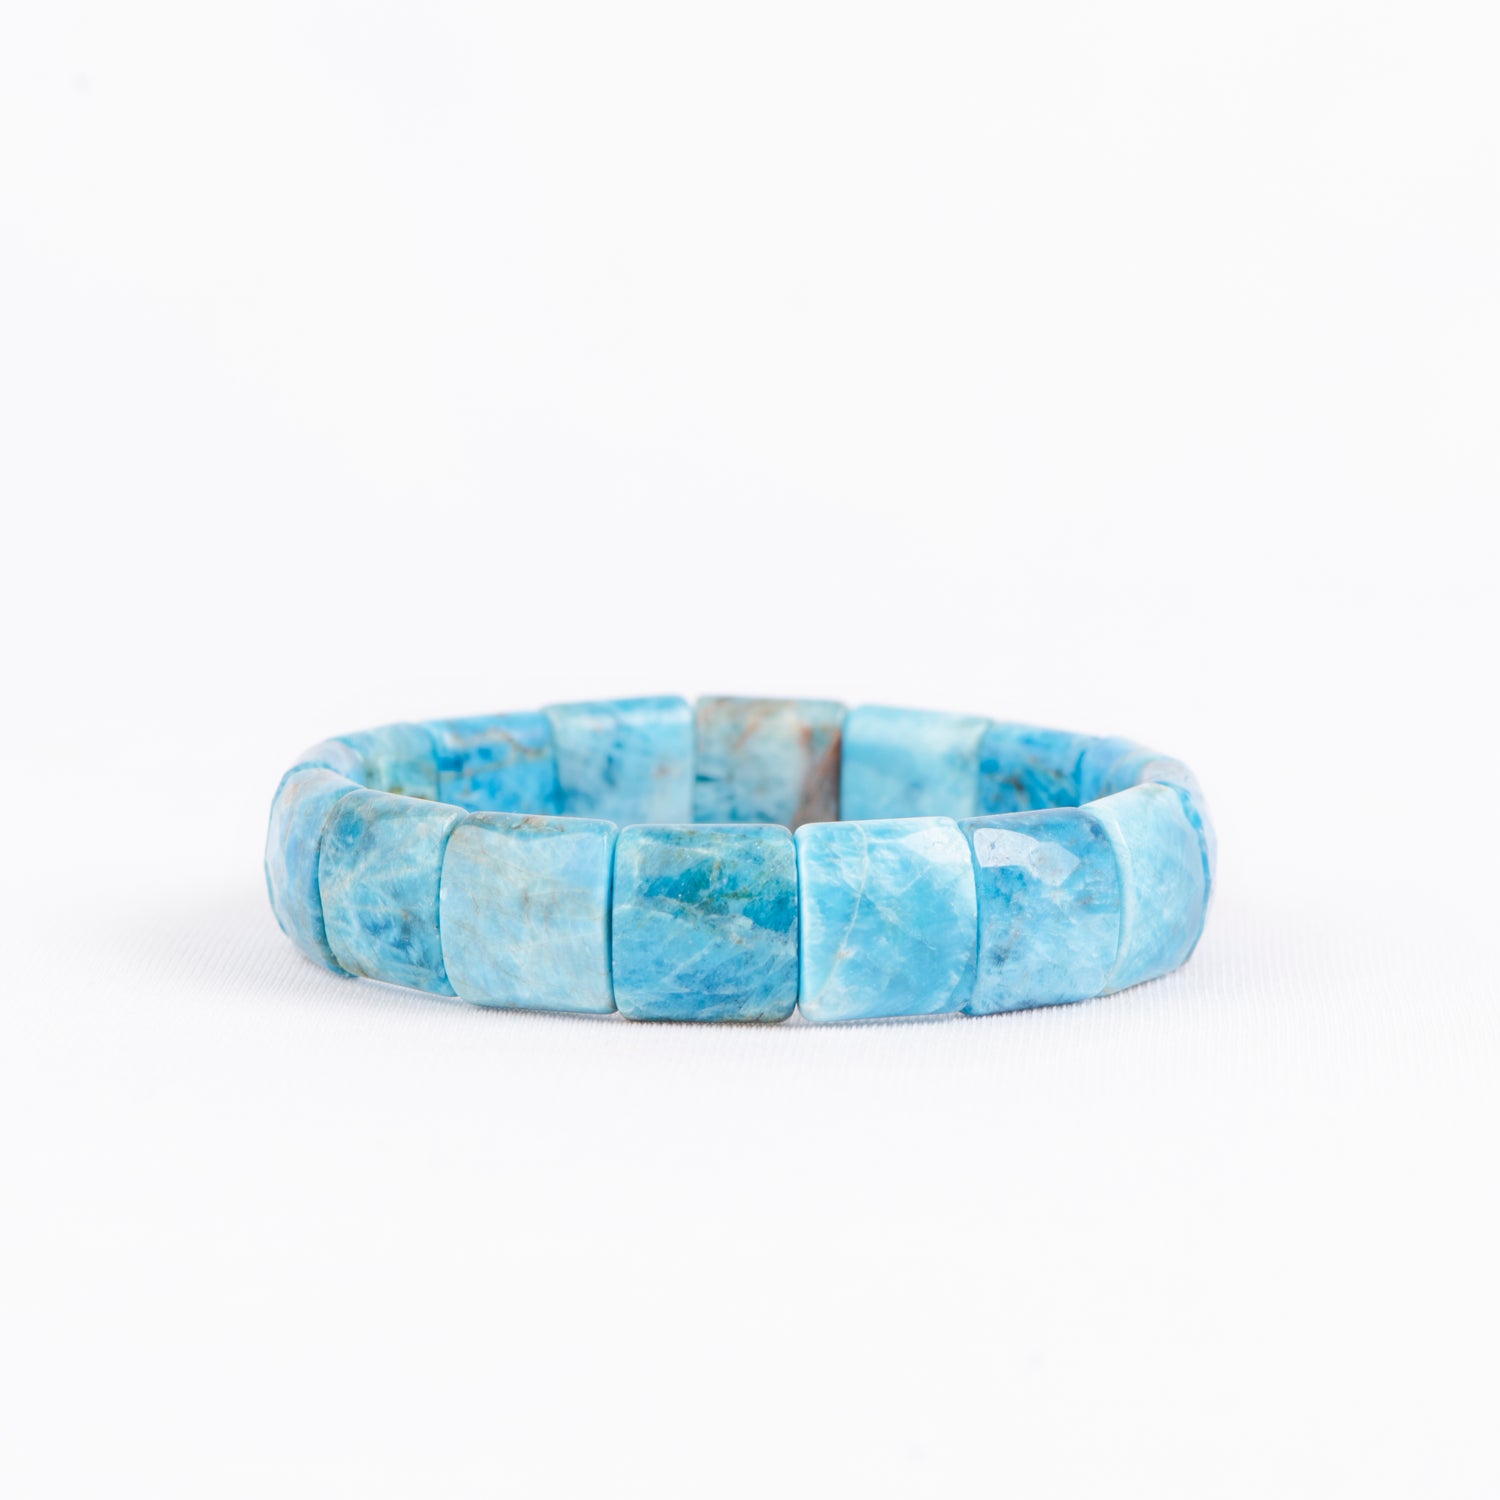 Blue Apatite Square Beads Bracelet